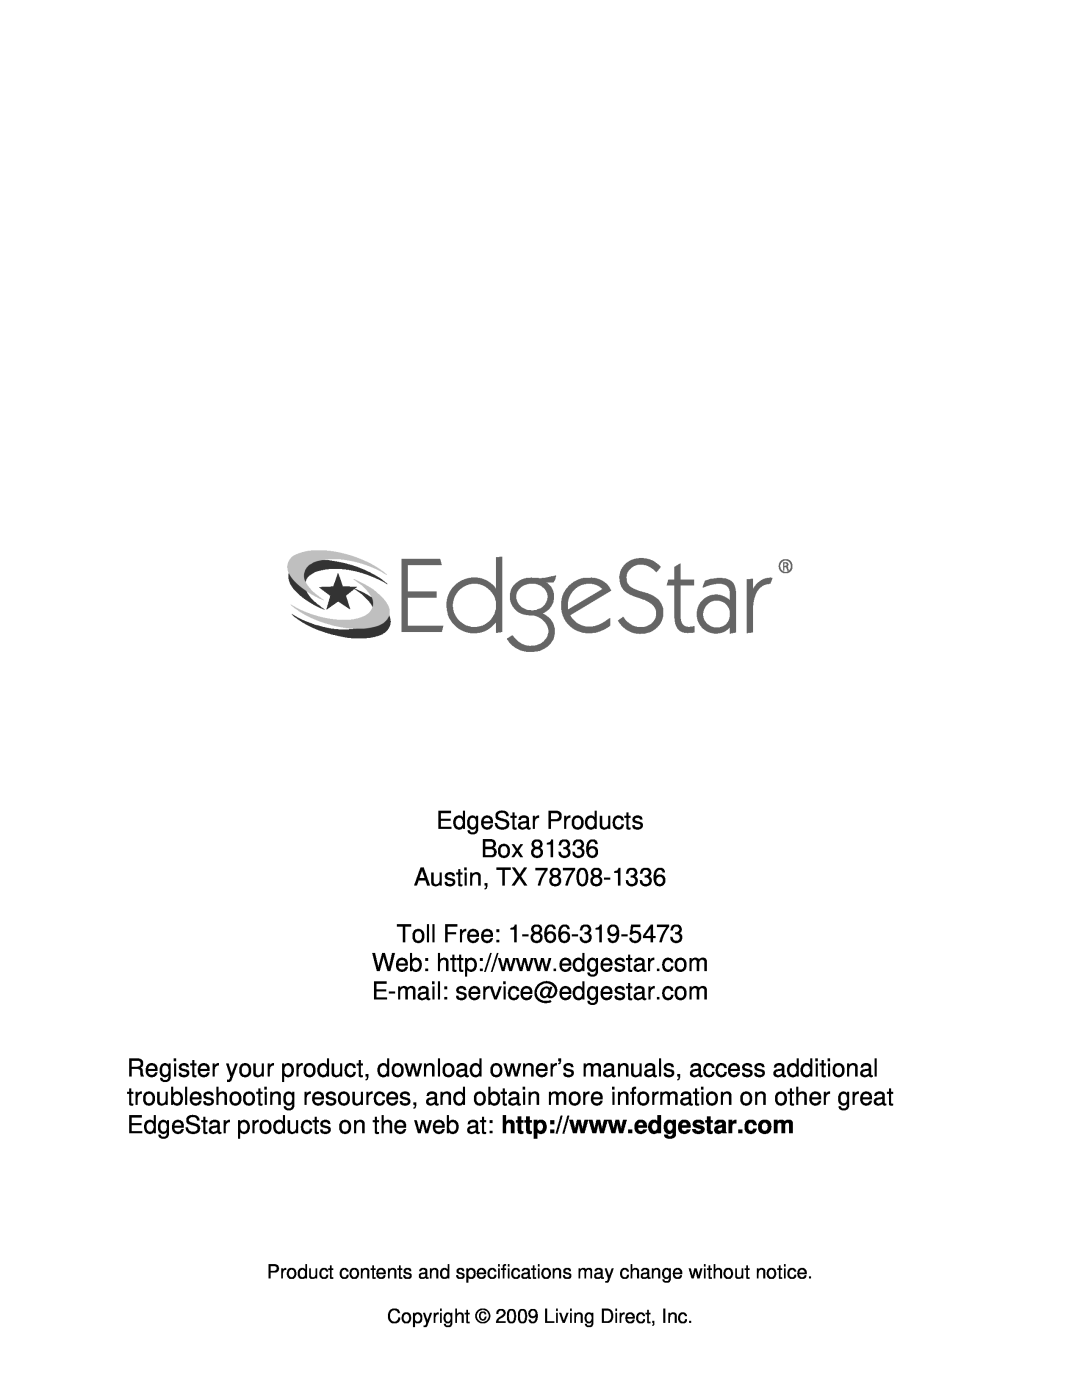 EdgeStar AP12005ECO owner manual EdgeStar Products Box Austin, TX Toll Free, Copyright 2009 Living Direct, Inc 